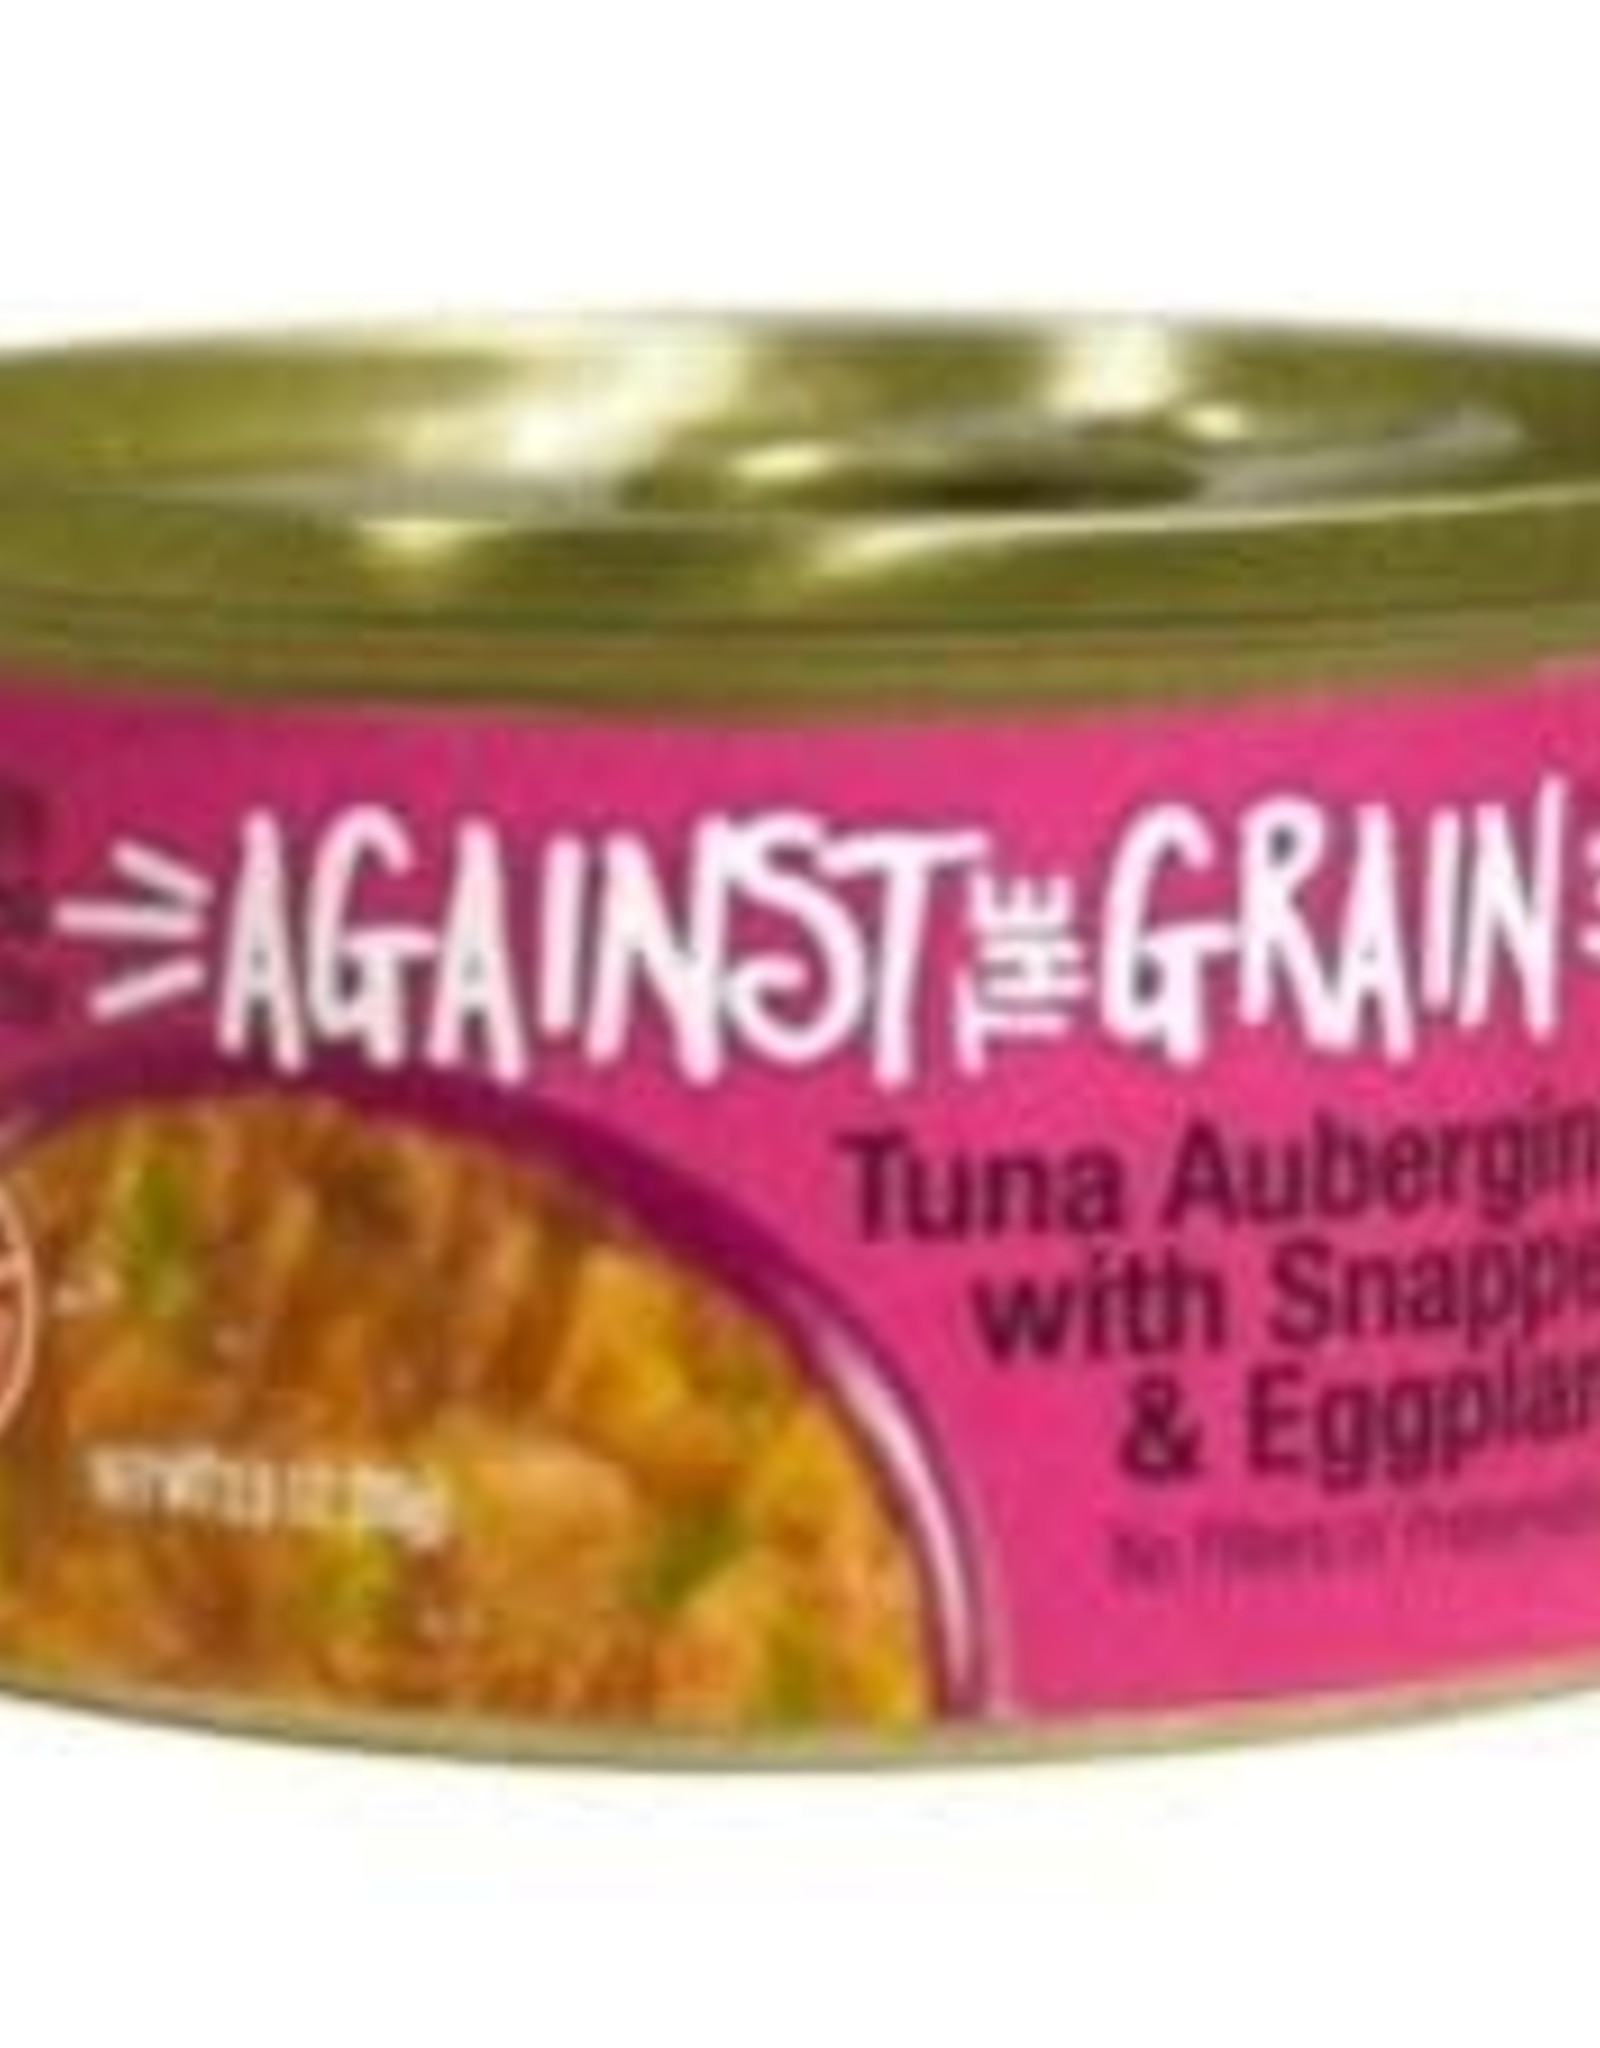 Evanger's Against the Grain Tuna Snapper Eggplant Cat 2.8 oz